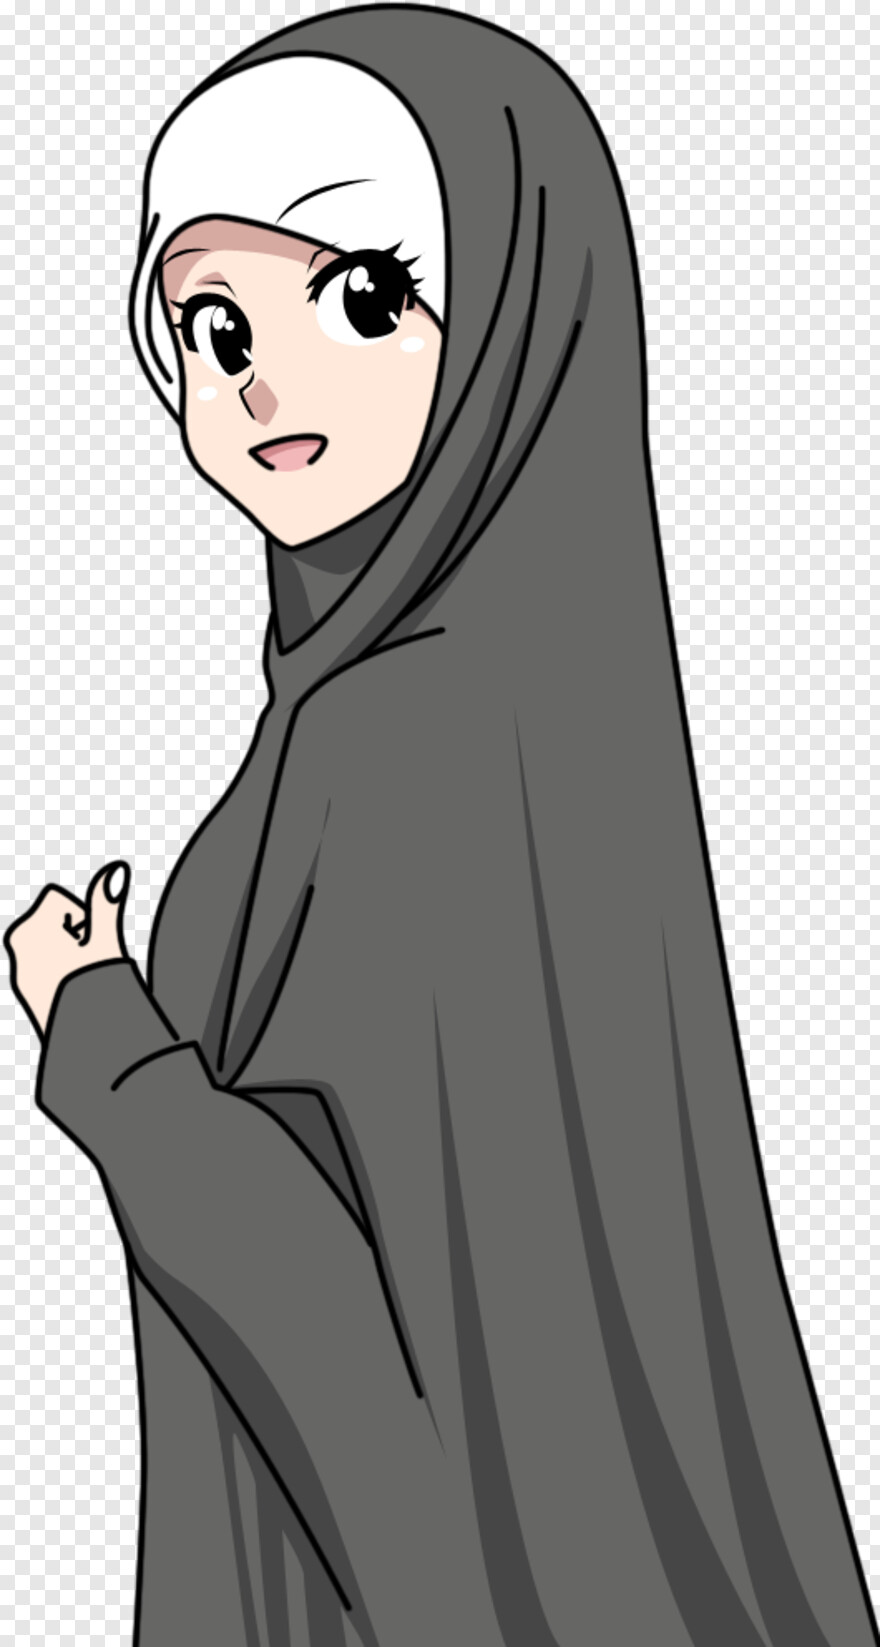 Anime Character, Cute Anime Eyes, Muslim Cap, Muslim, Anime Girls, Anime  Boy #512129 - Free Icon Library